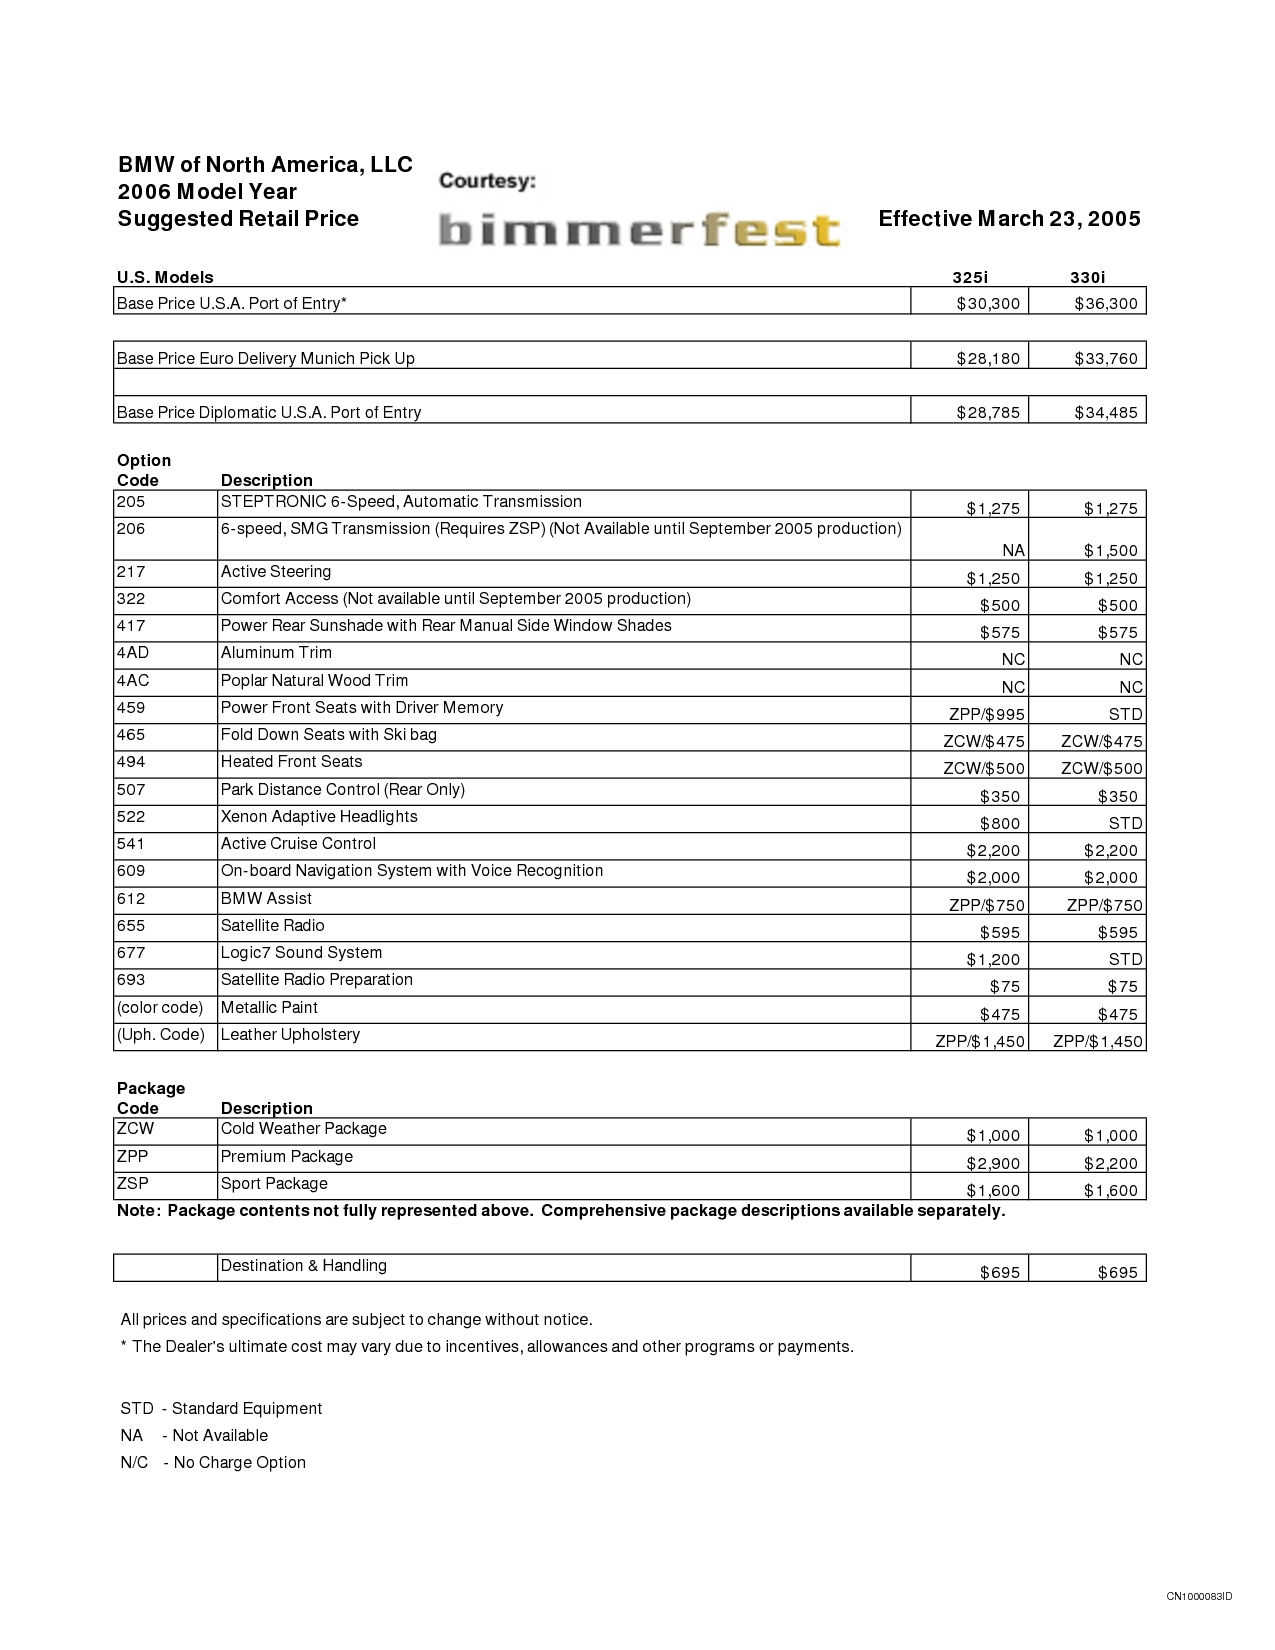 pin invoice price bmw 325i series on pinterest bmw invoice price